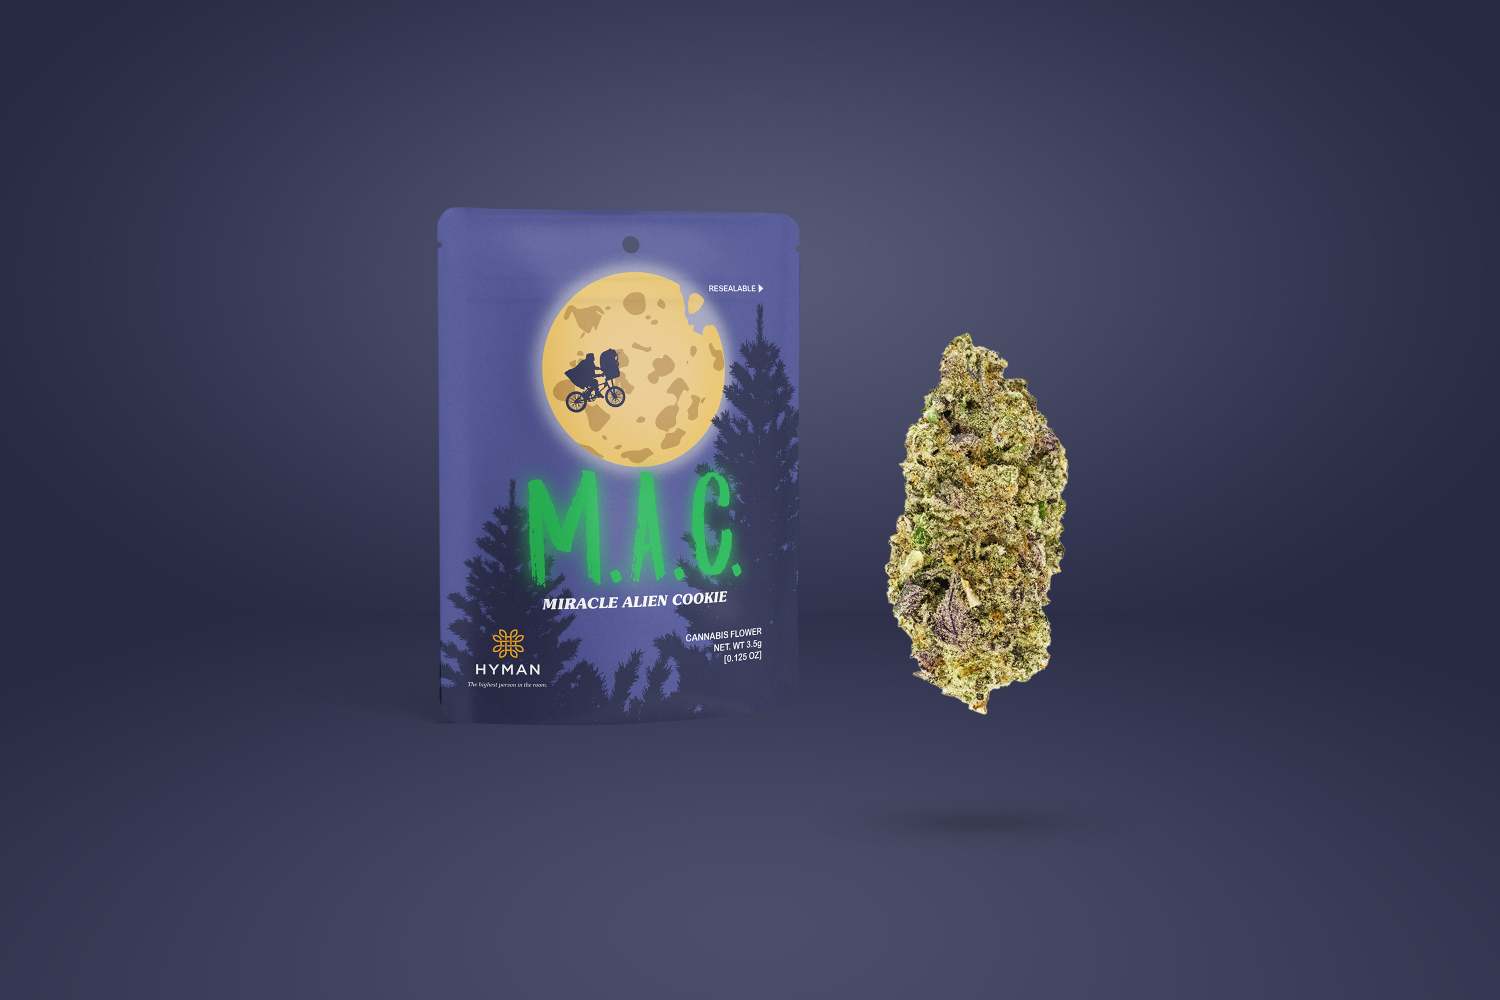 Miracle alien cookie, Weed Buds, Hyman Cannabis Strain